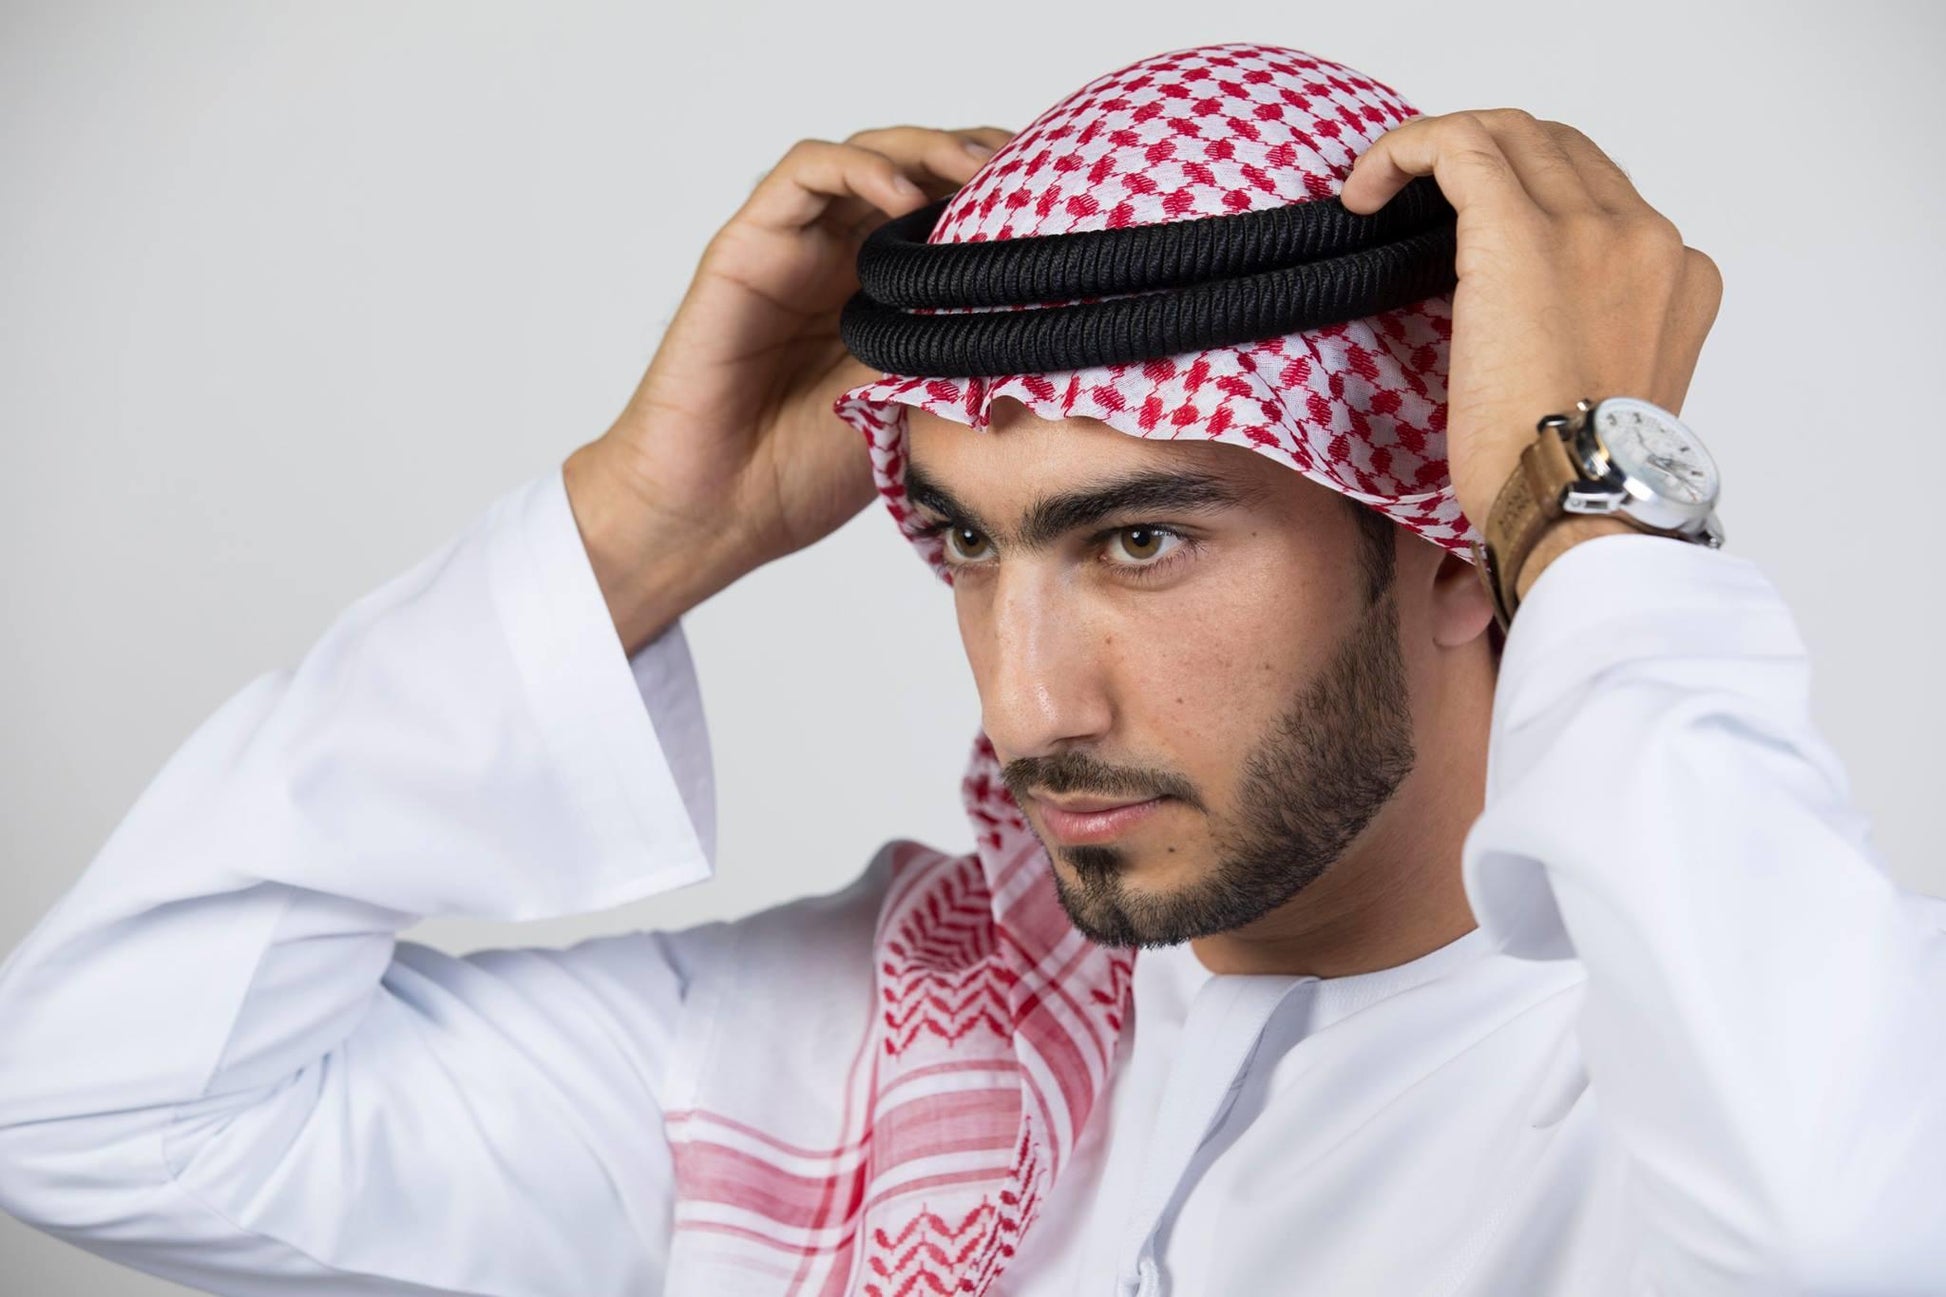 Premium Black and White Saudi style Shemagh/Keffiyyah Arab Men's